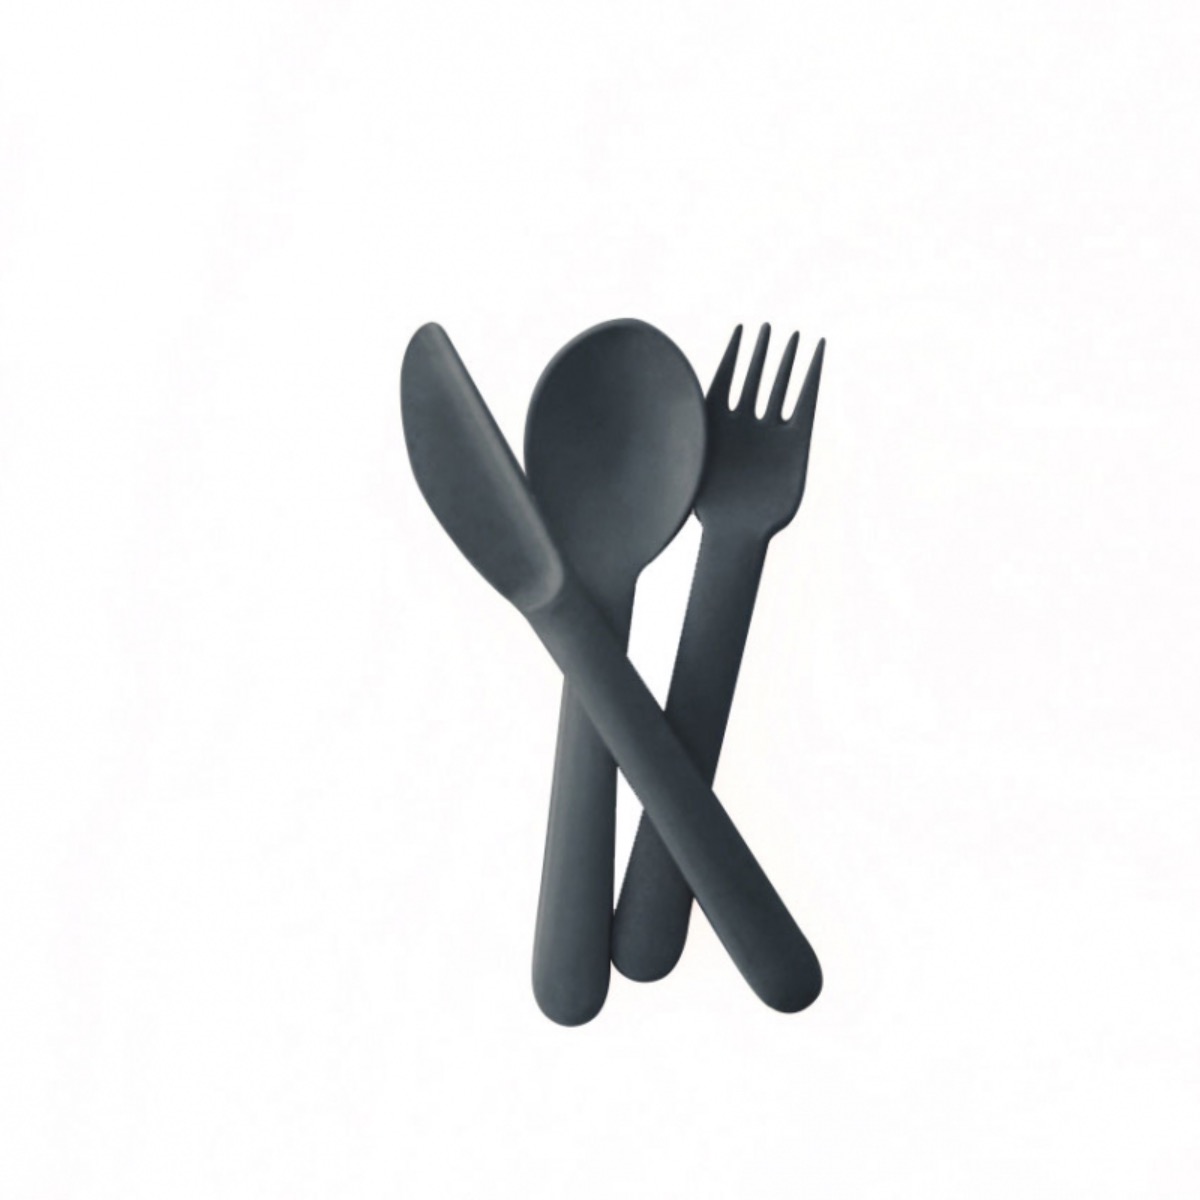 Bambino Trio Cutlery Set (fork, spoon, knife) - Storm